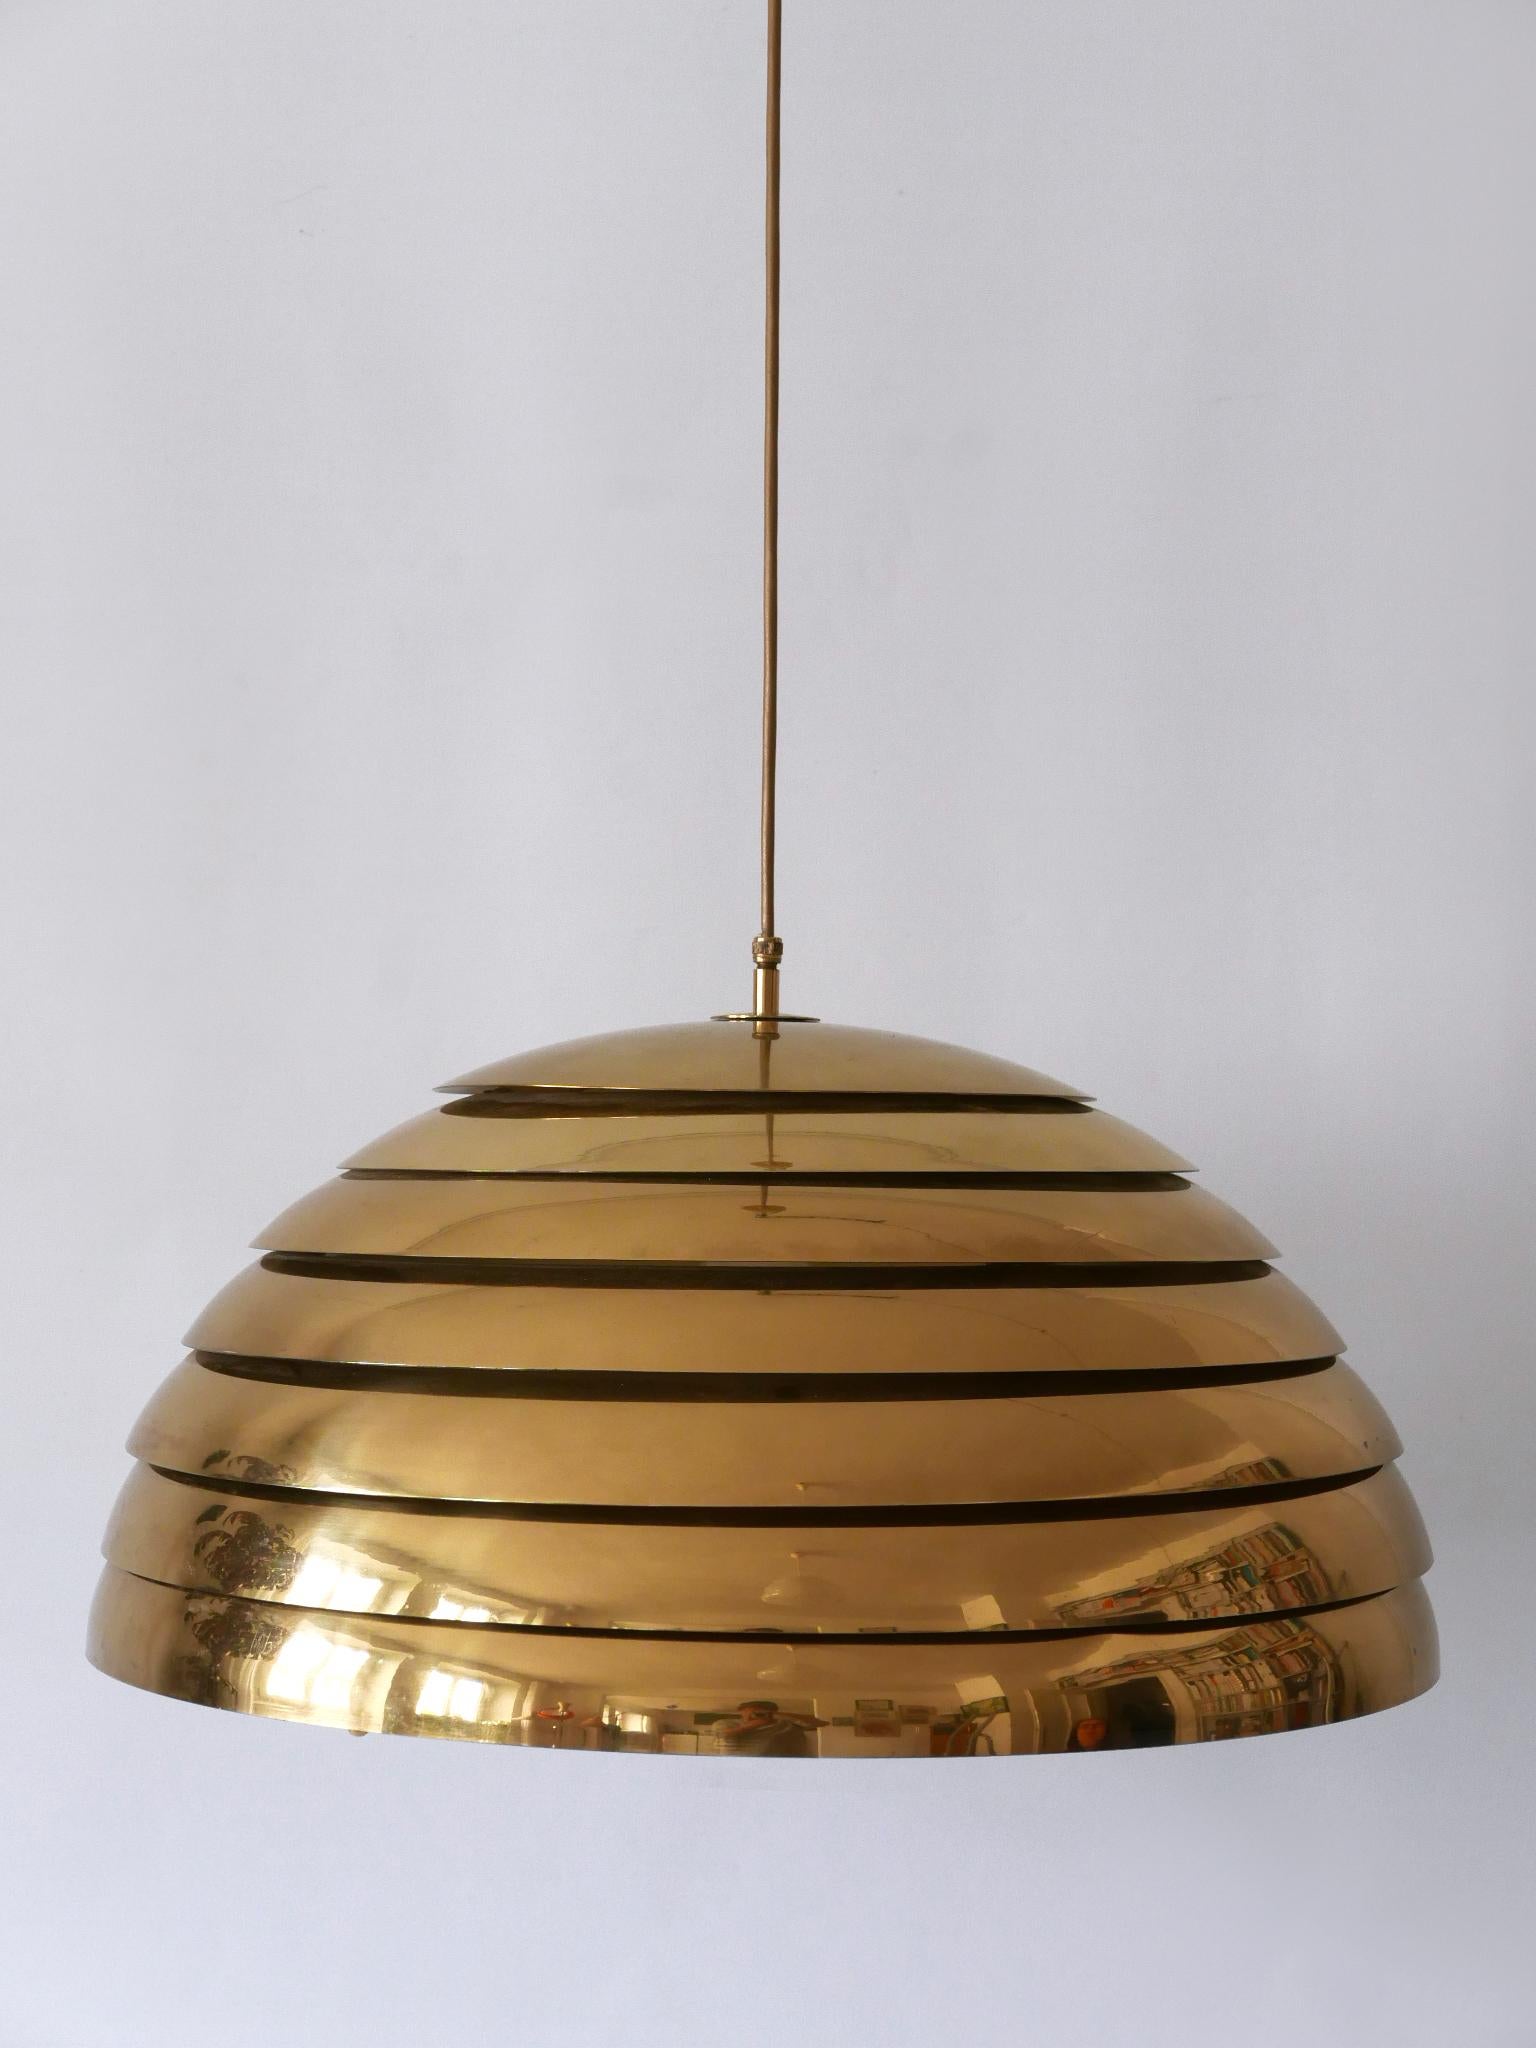 Large Mid-Century Modern Pendant Lamp by Vereinigte Werkstätten Germany 1960s For Sale 3